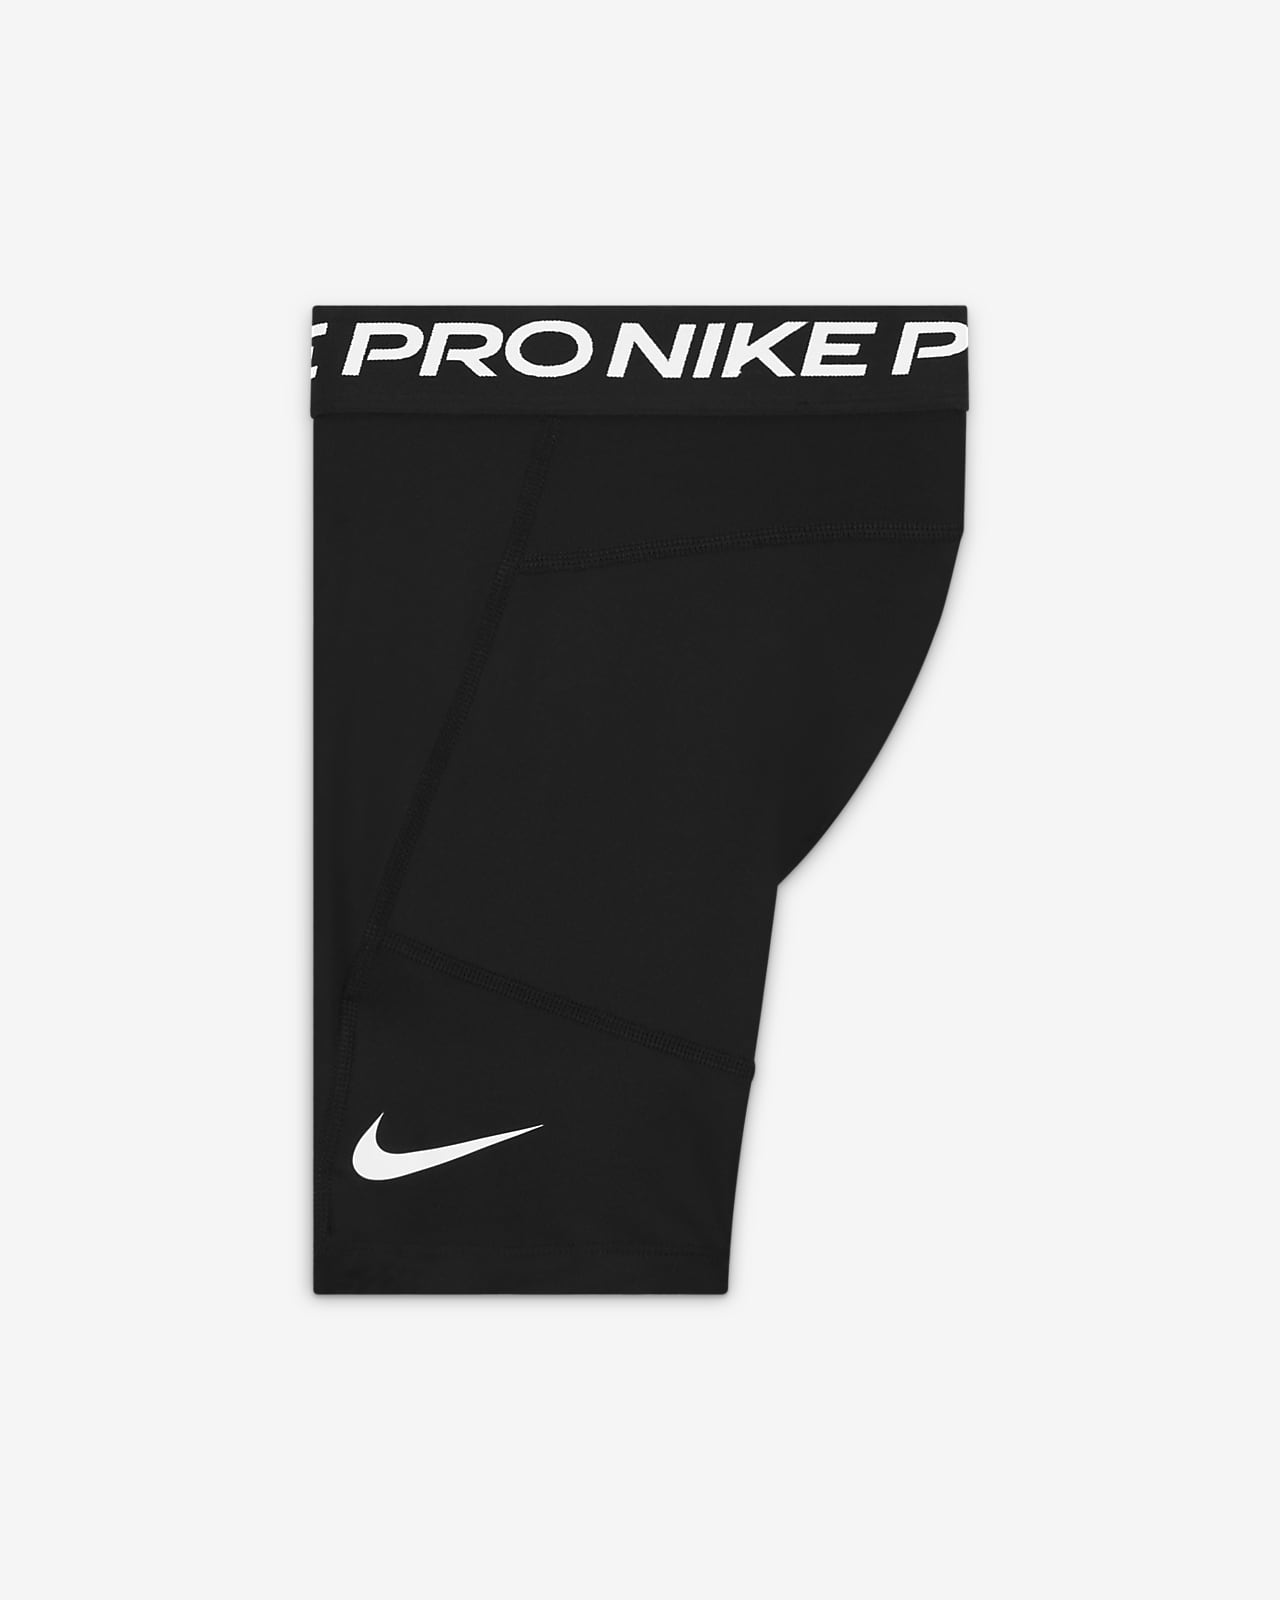 Fantasía Pinchazo forma Nike Pro Dri-FIT Pantalón corto - Niño. Nike ES